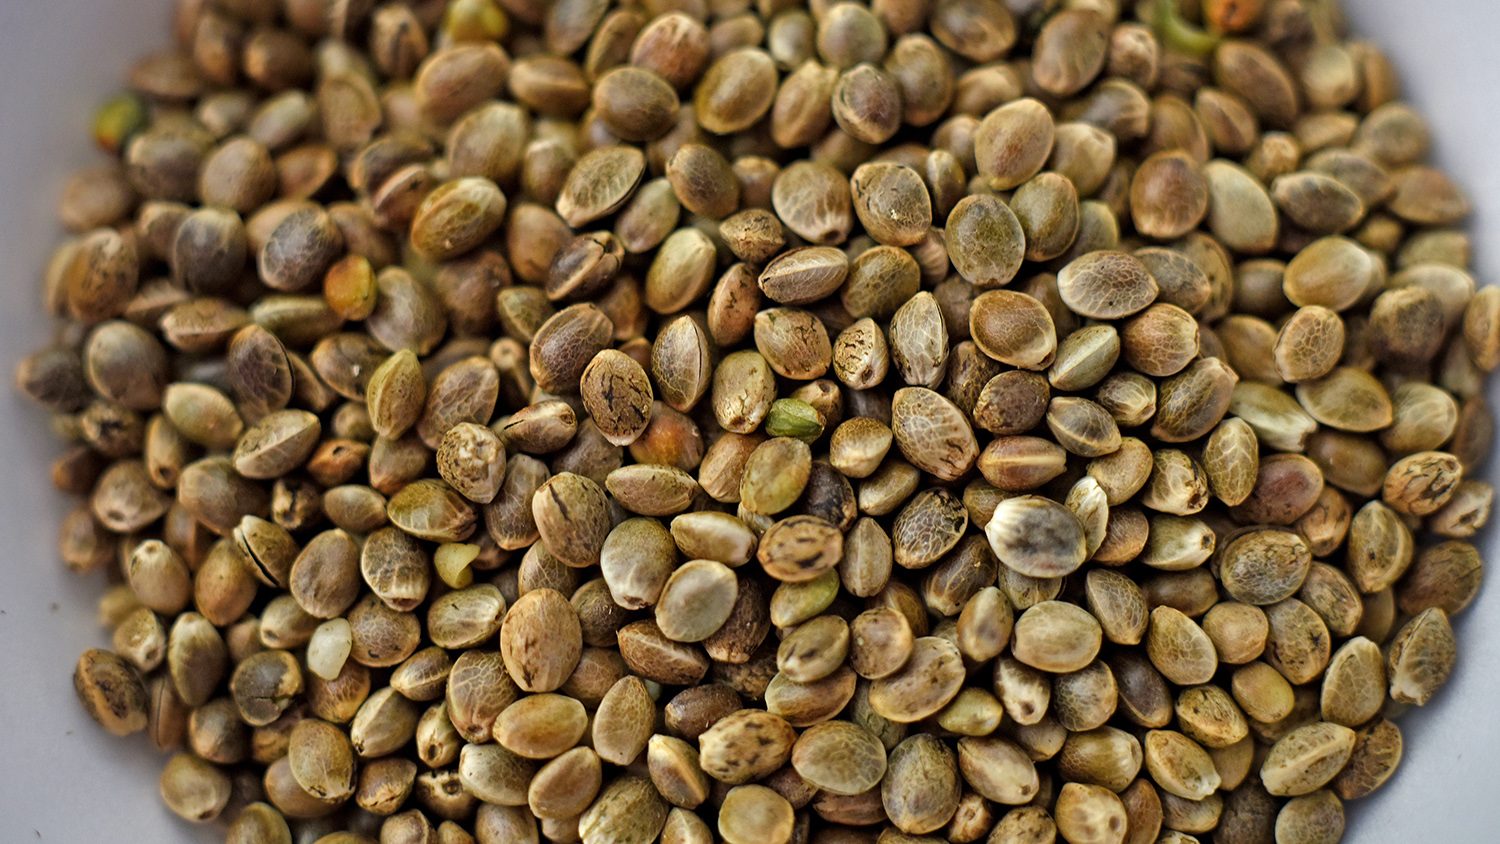 hemp seeds